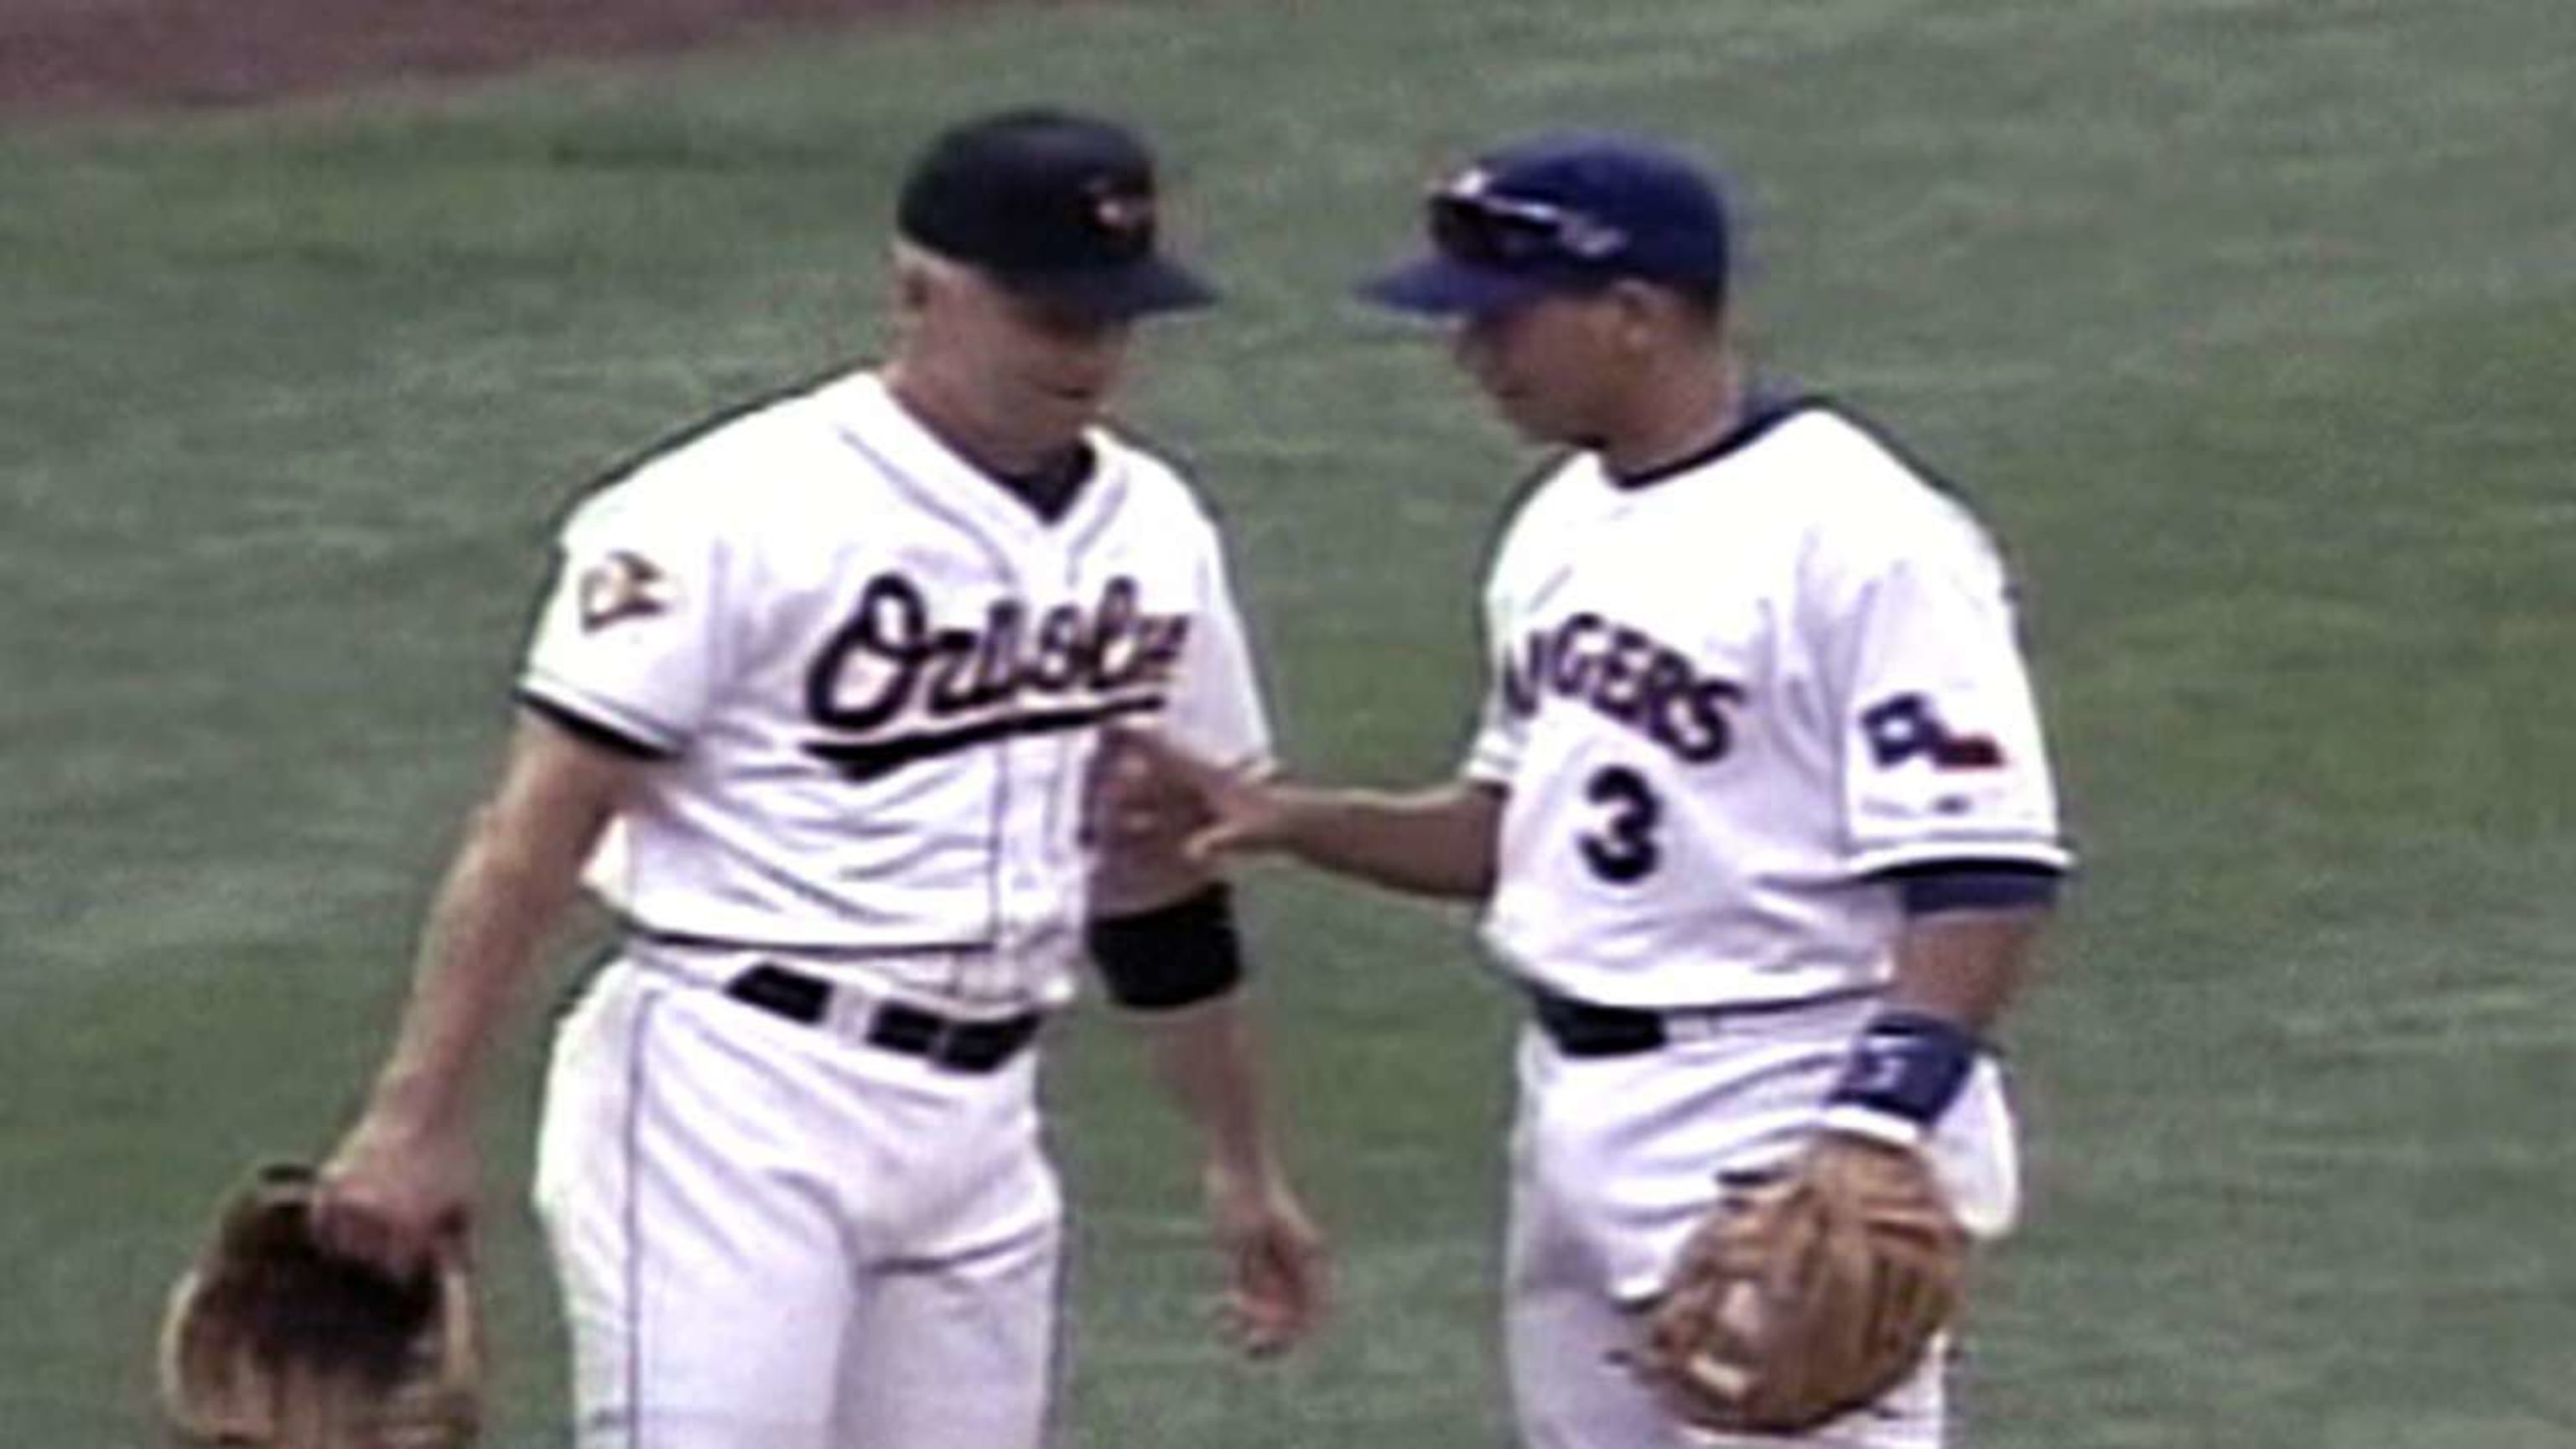 2001 All-Star Game streaming on MLB platforms